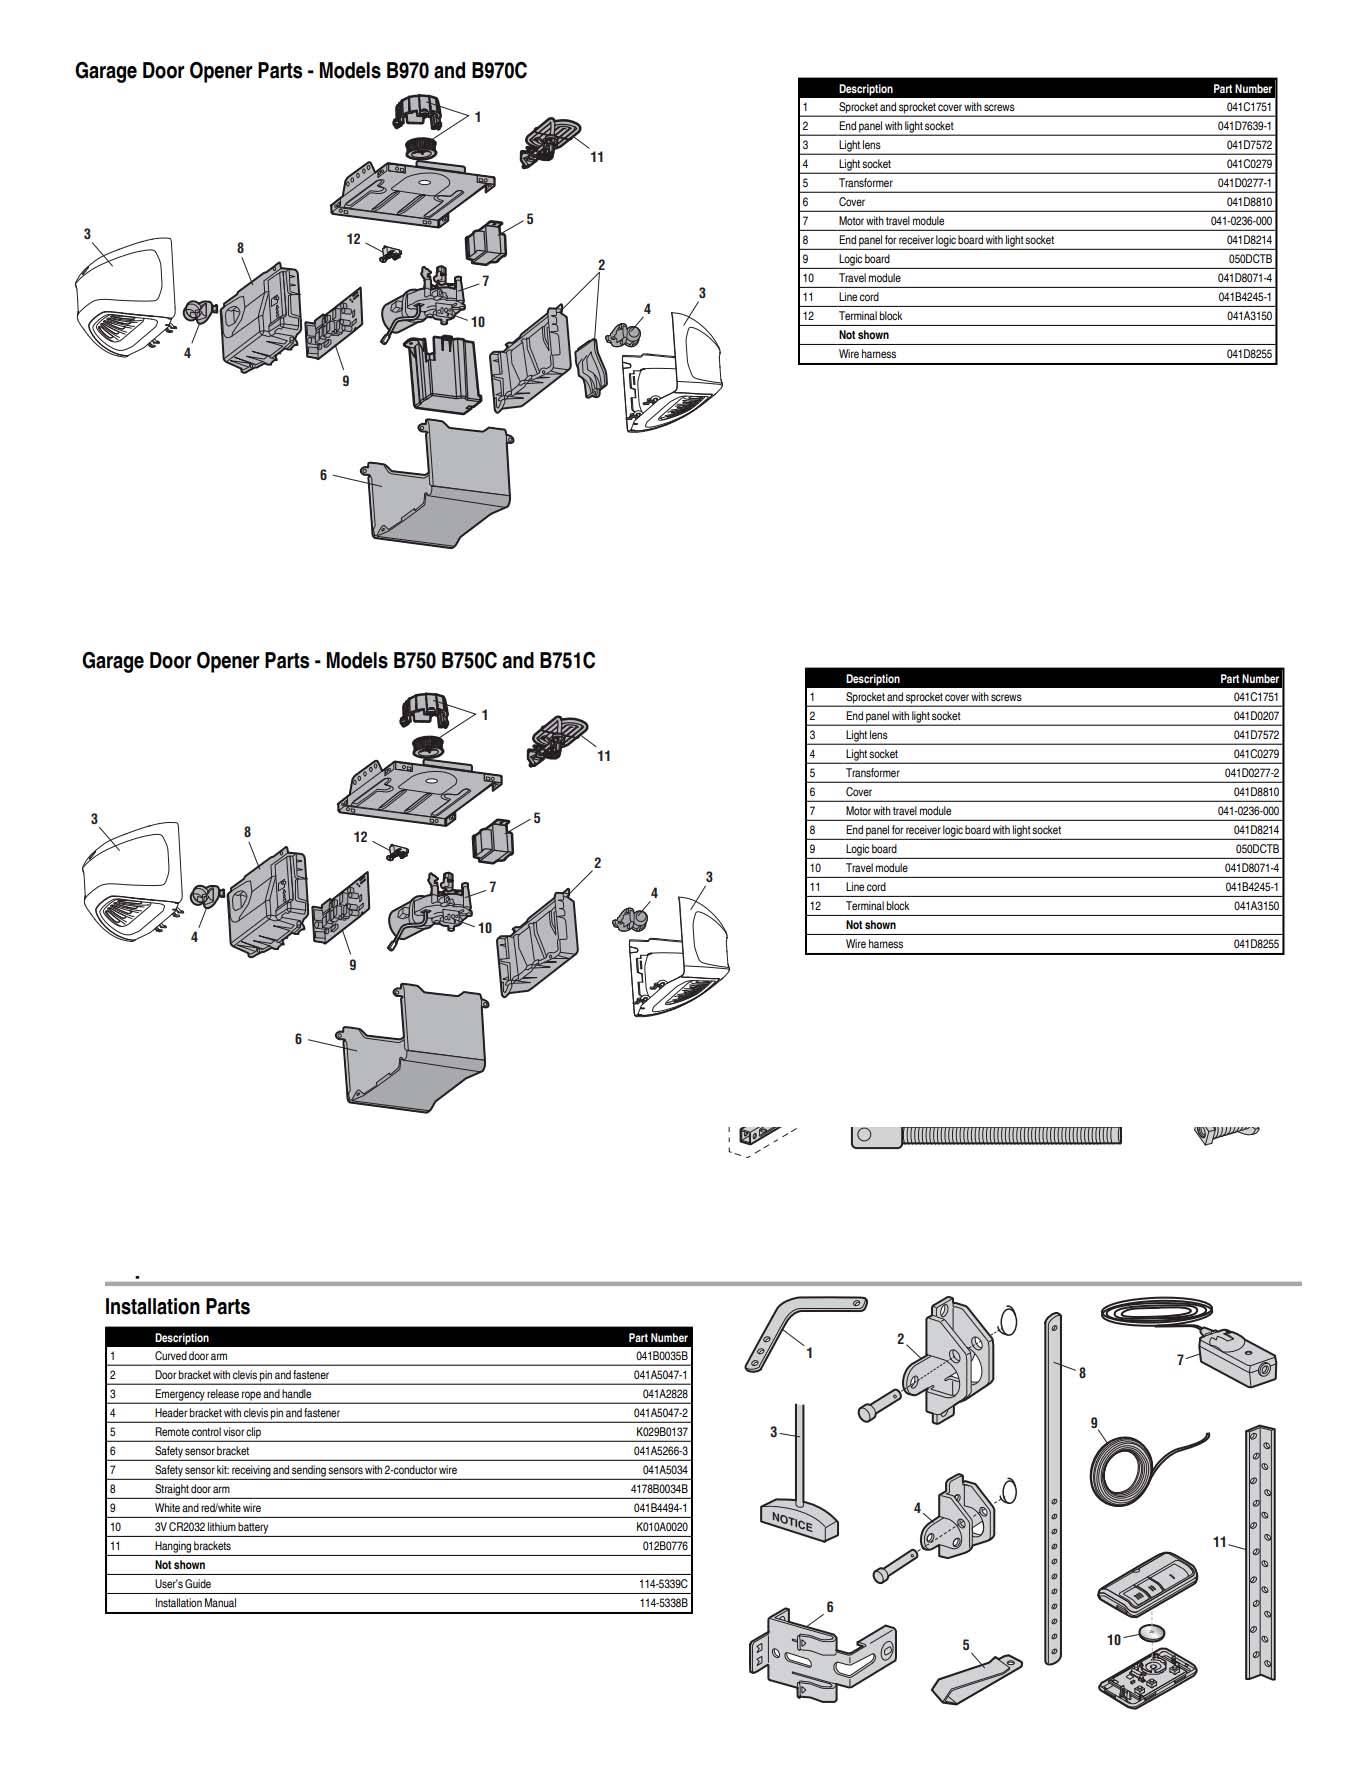 Chamberlain B970 and B970C Garage Door Opener Parts Diagram and List